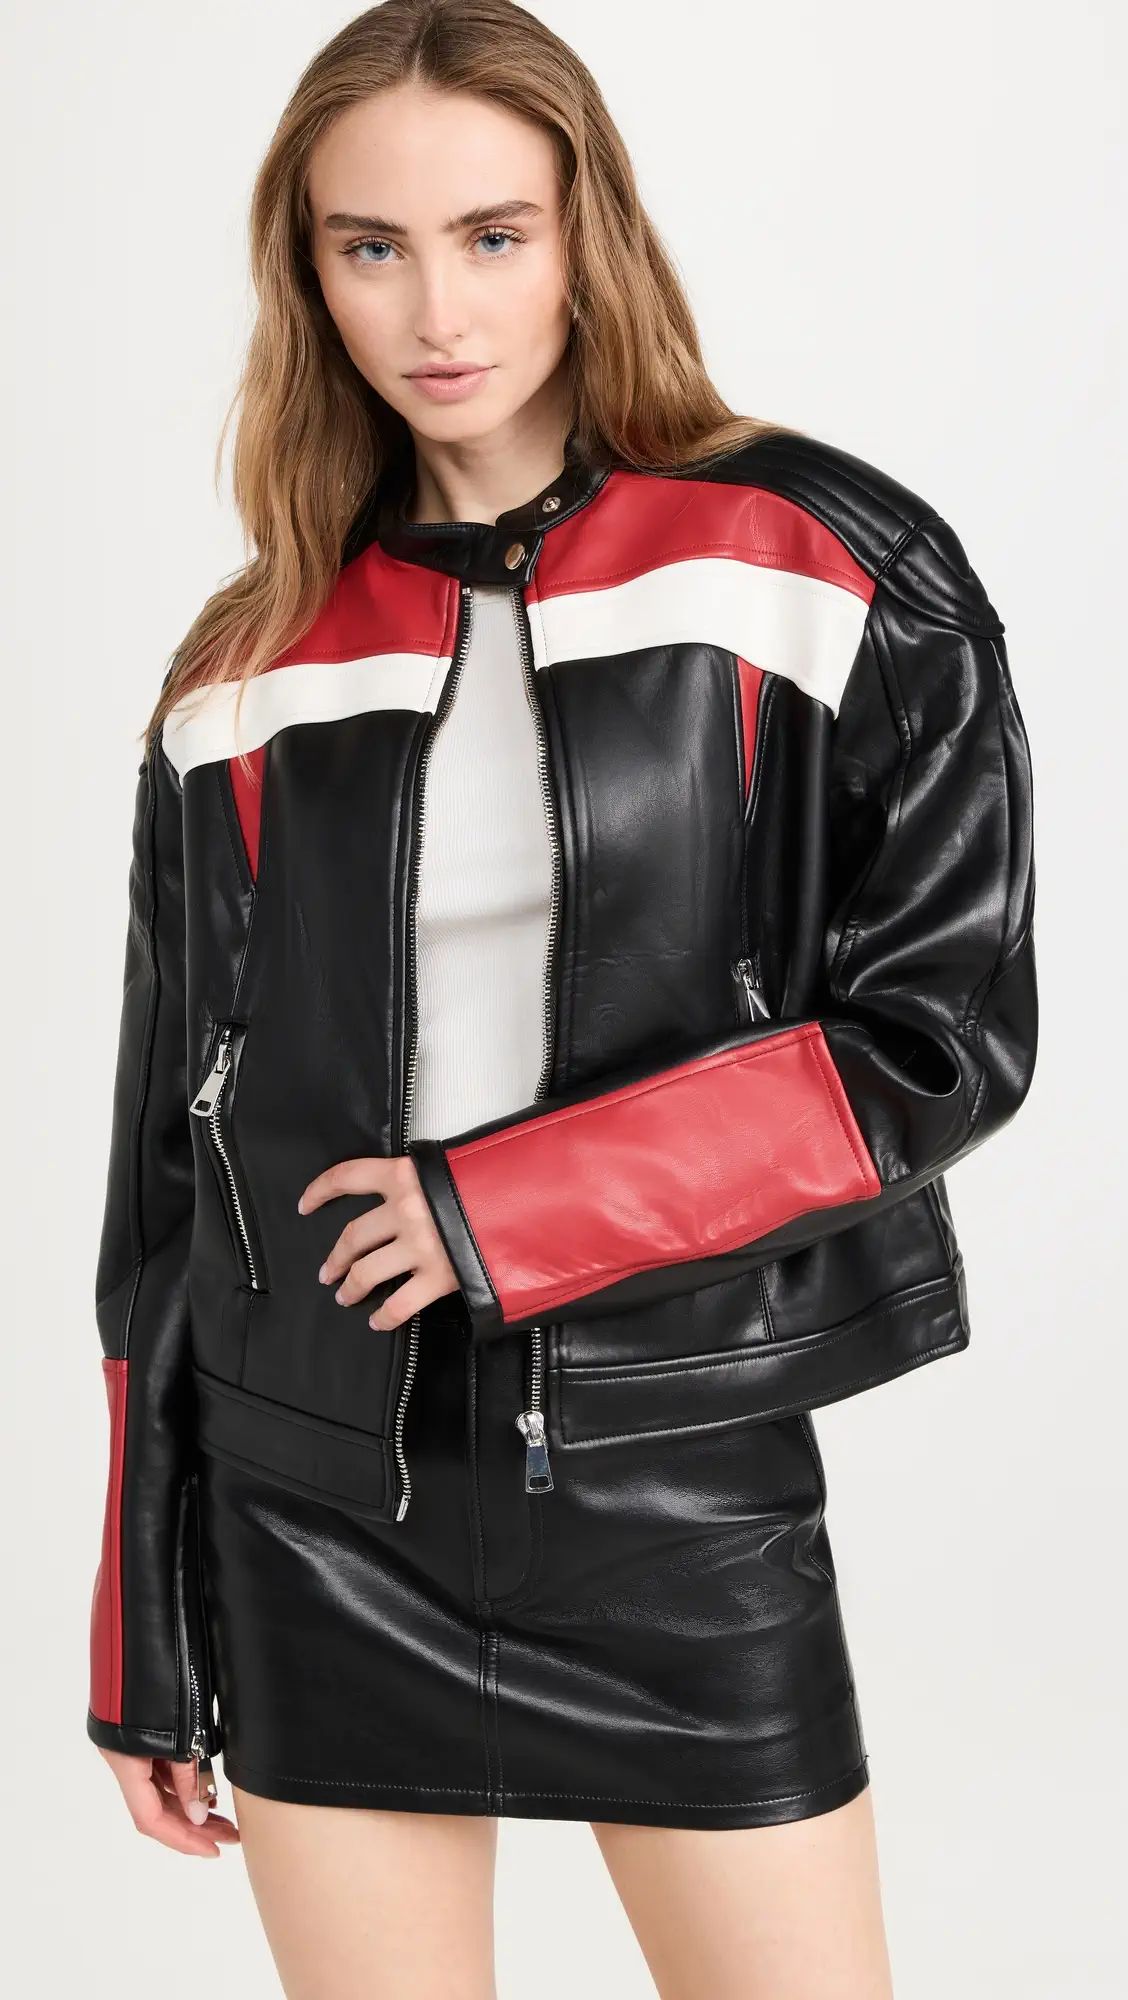 Lioness Top Model Faux Leather Biker Jacket | Shopbop | Shopbop